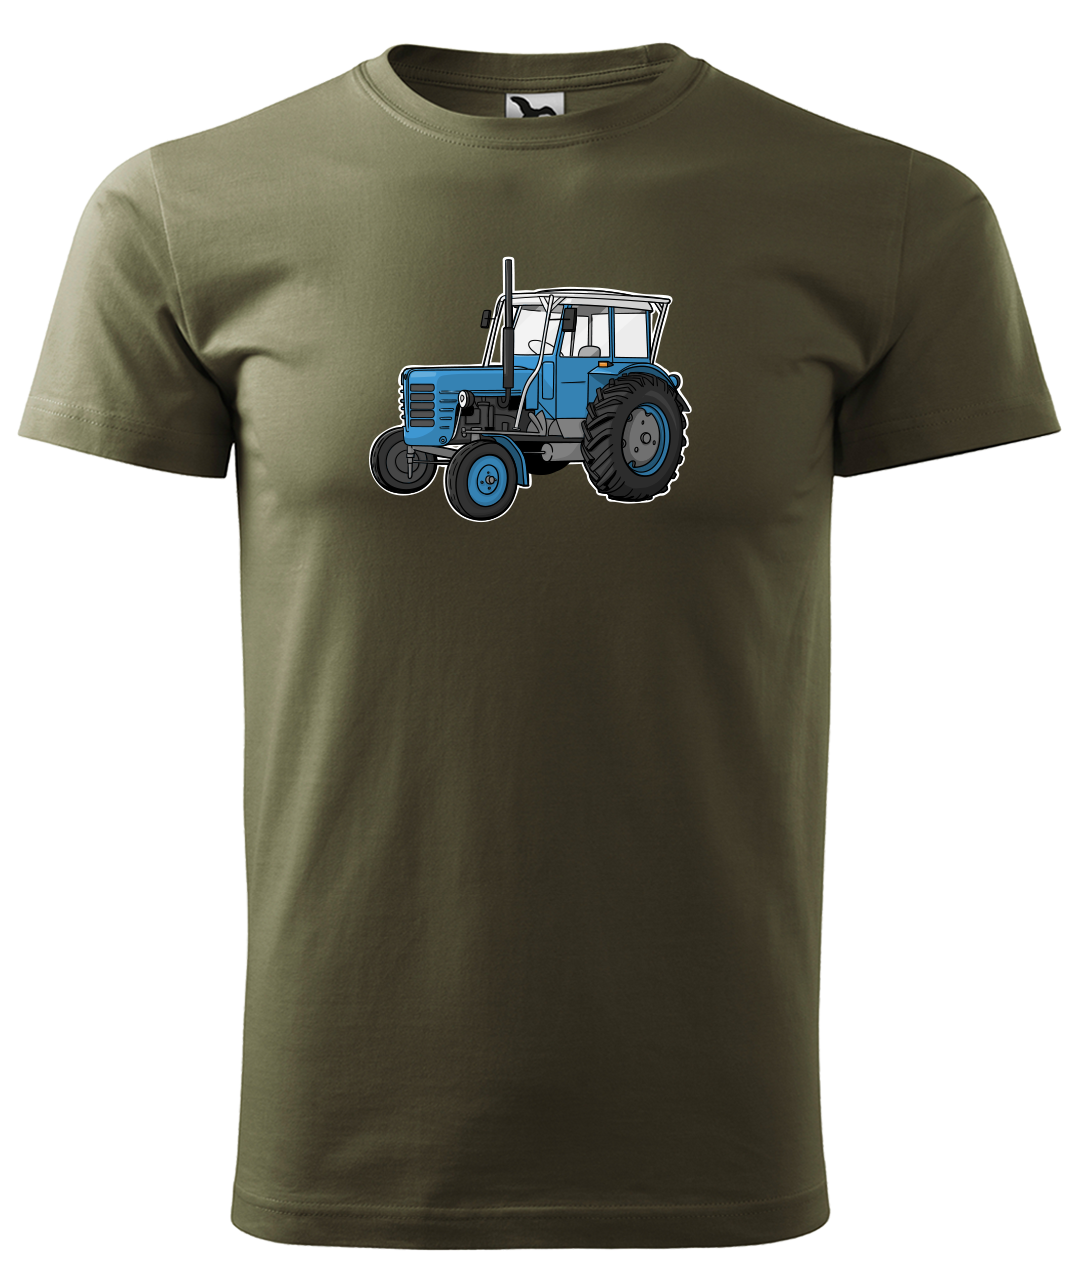 Dětské tričko s traktorem - Starý traktor Velikost: 4 roky / 110 cm, Barva: Military (69)